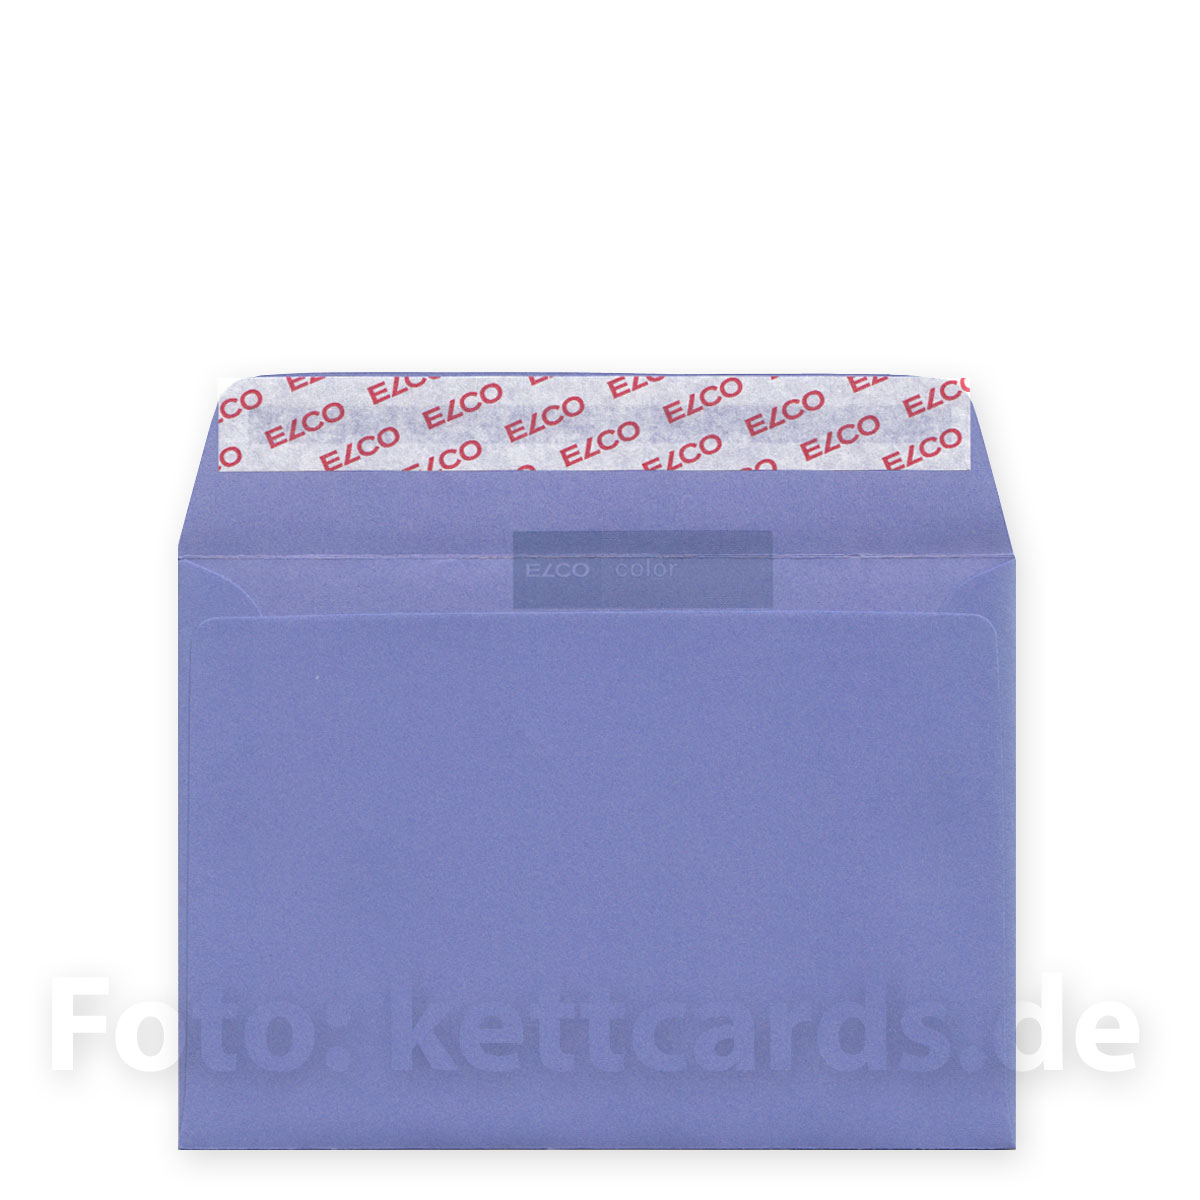 fliederfarbene Umschläge DIN C6 haftklebend, Elco color violett